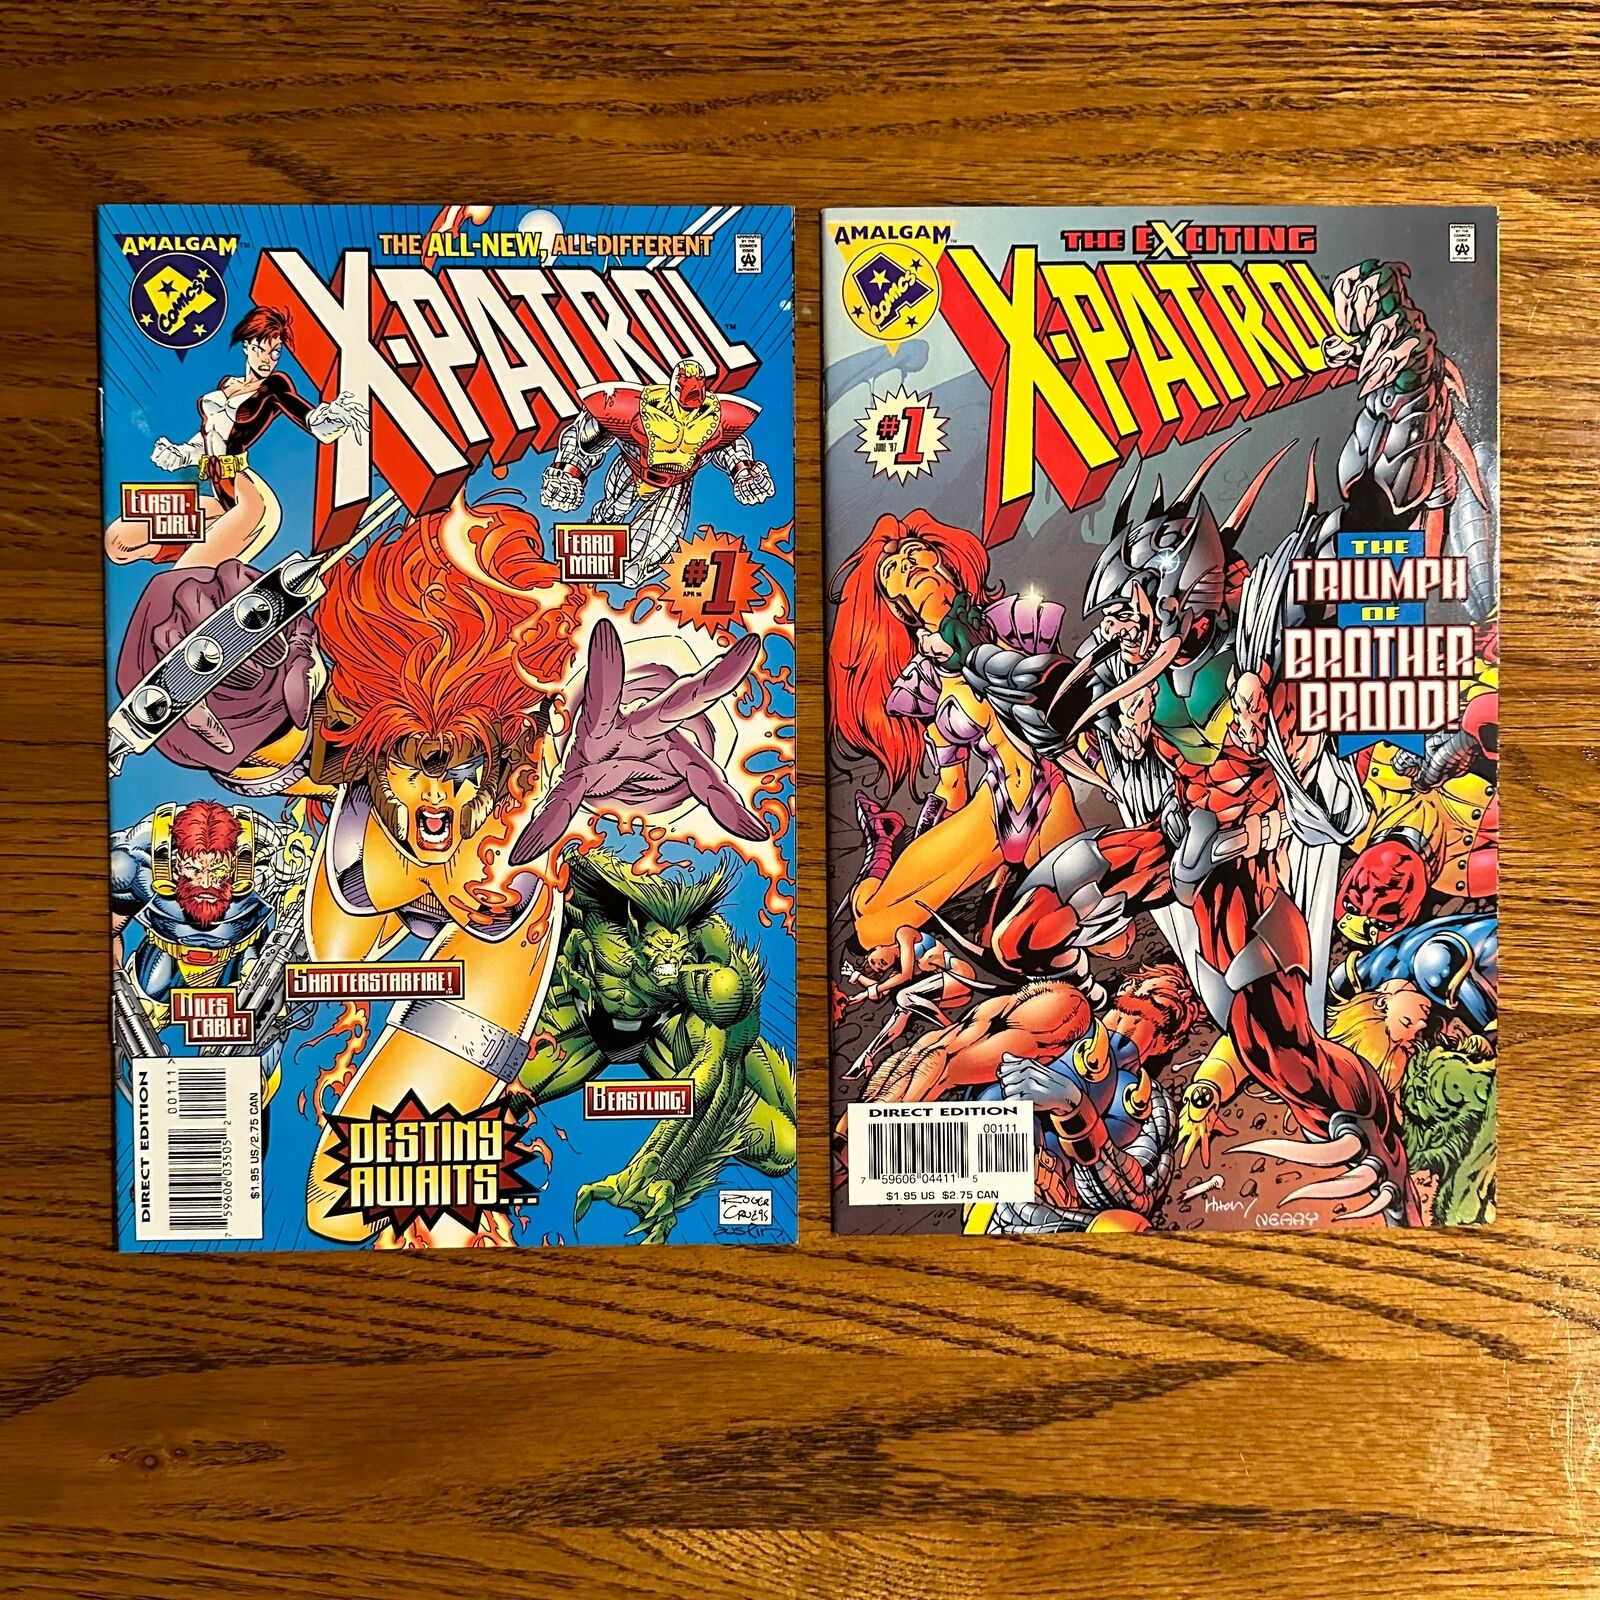 Amalgam: X-Patrol #1 and The All-New, All Different X-Patrol #1